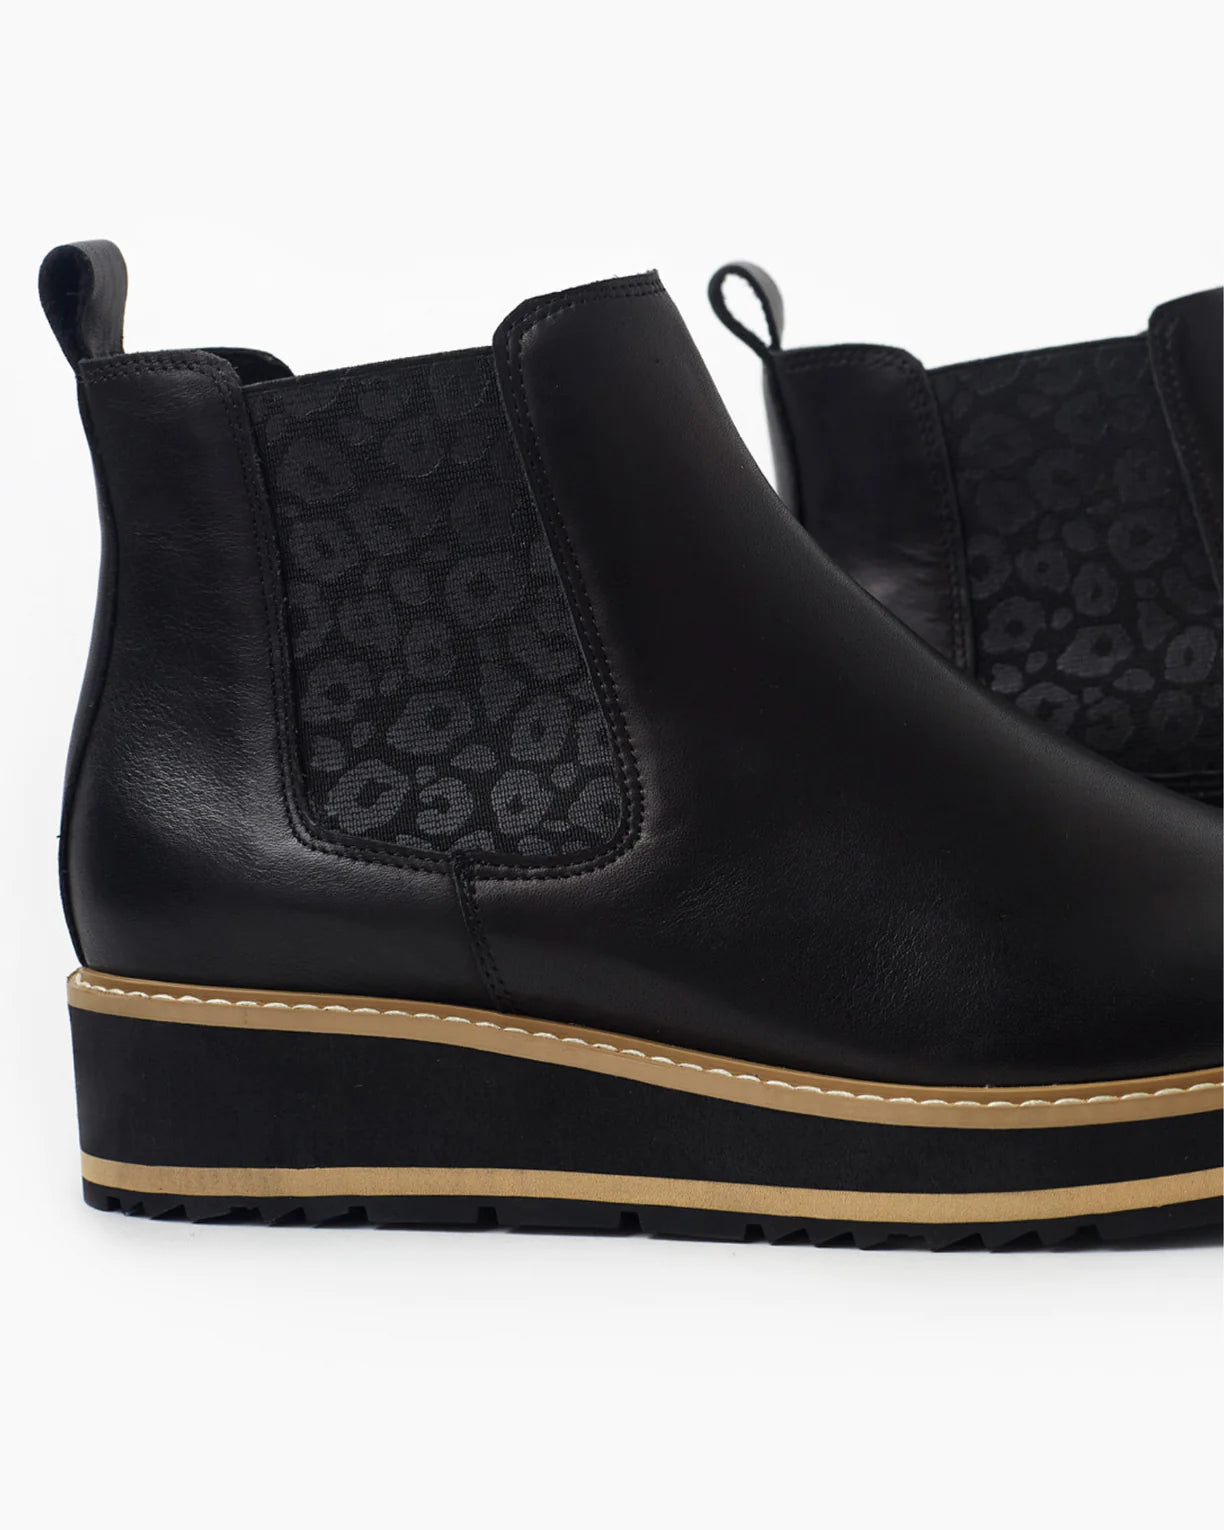 Walnut Melbourne - Jade Leather boot in Black